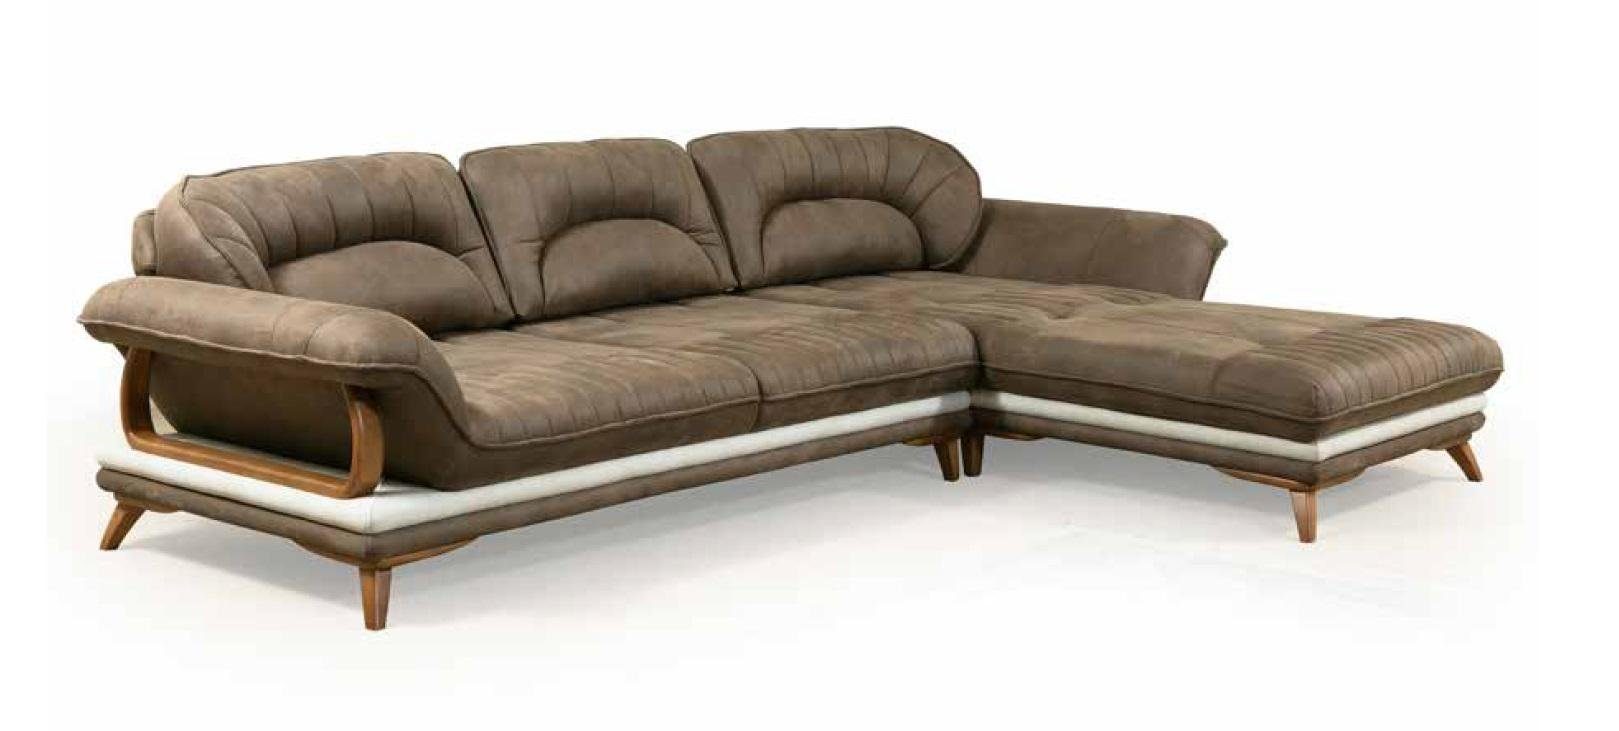 JVmoebel Ecksofa Ecksofa Wohnlandschaft Polster Ecksofa Stoff Couch Garnitur Luxus, Made in Europe